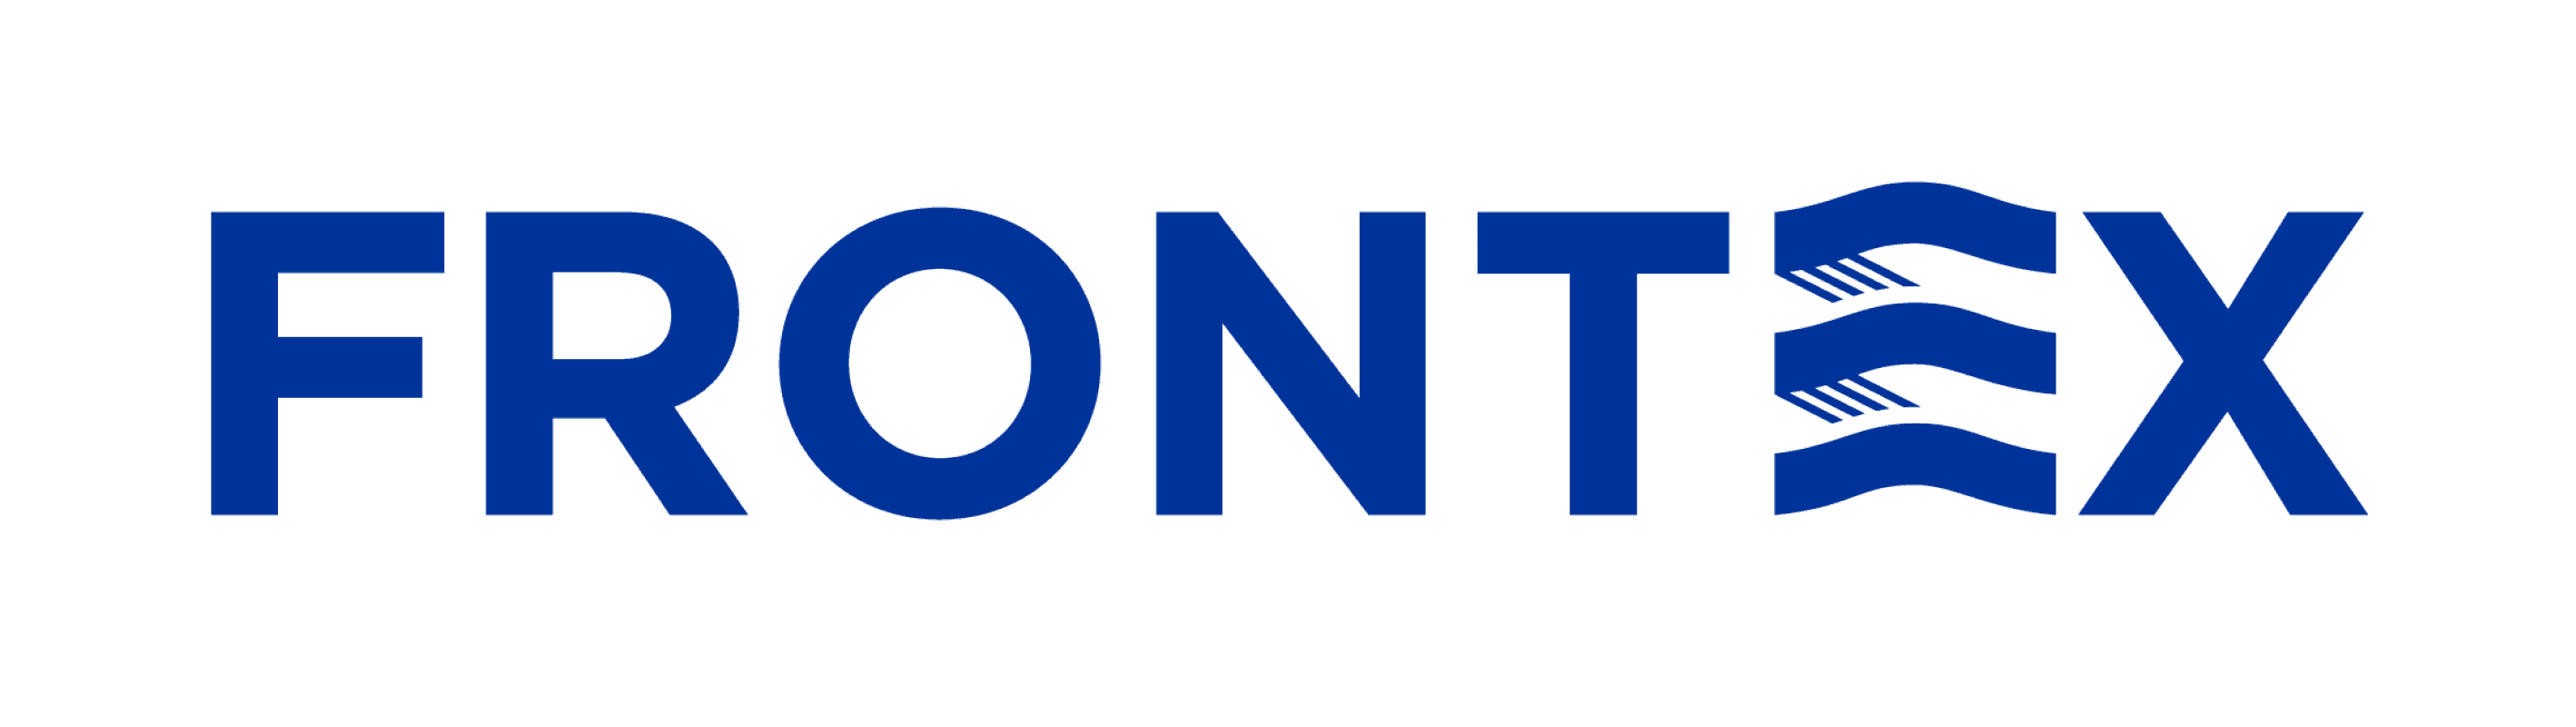 Frontex - logo